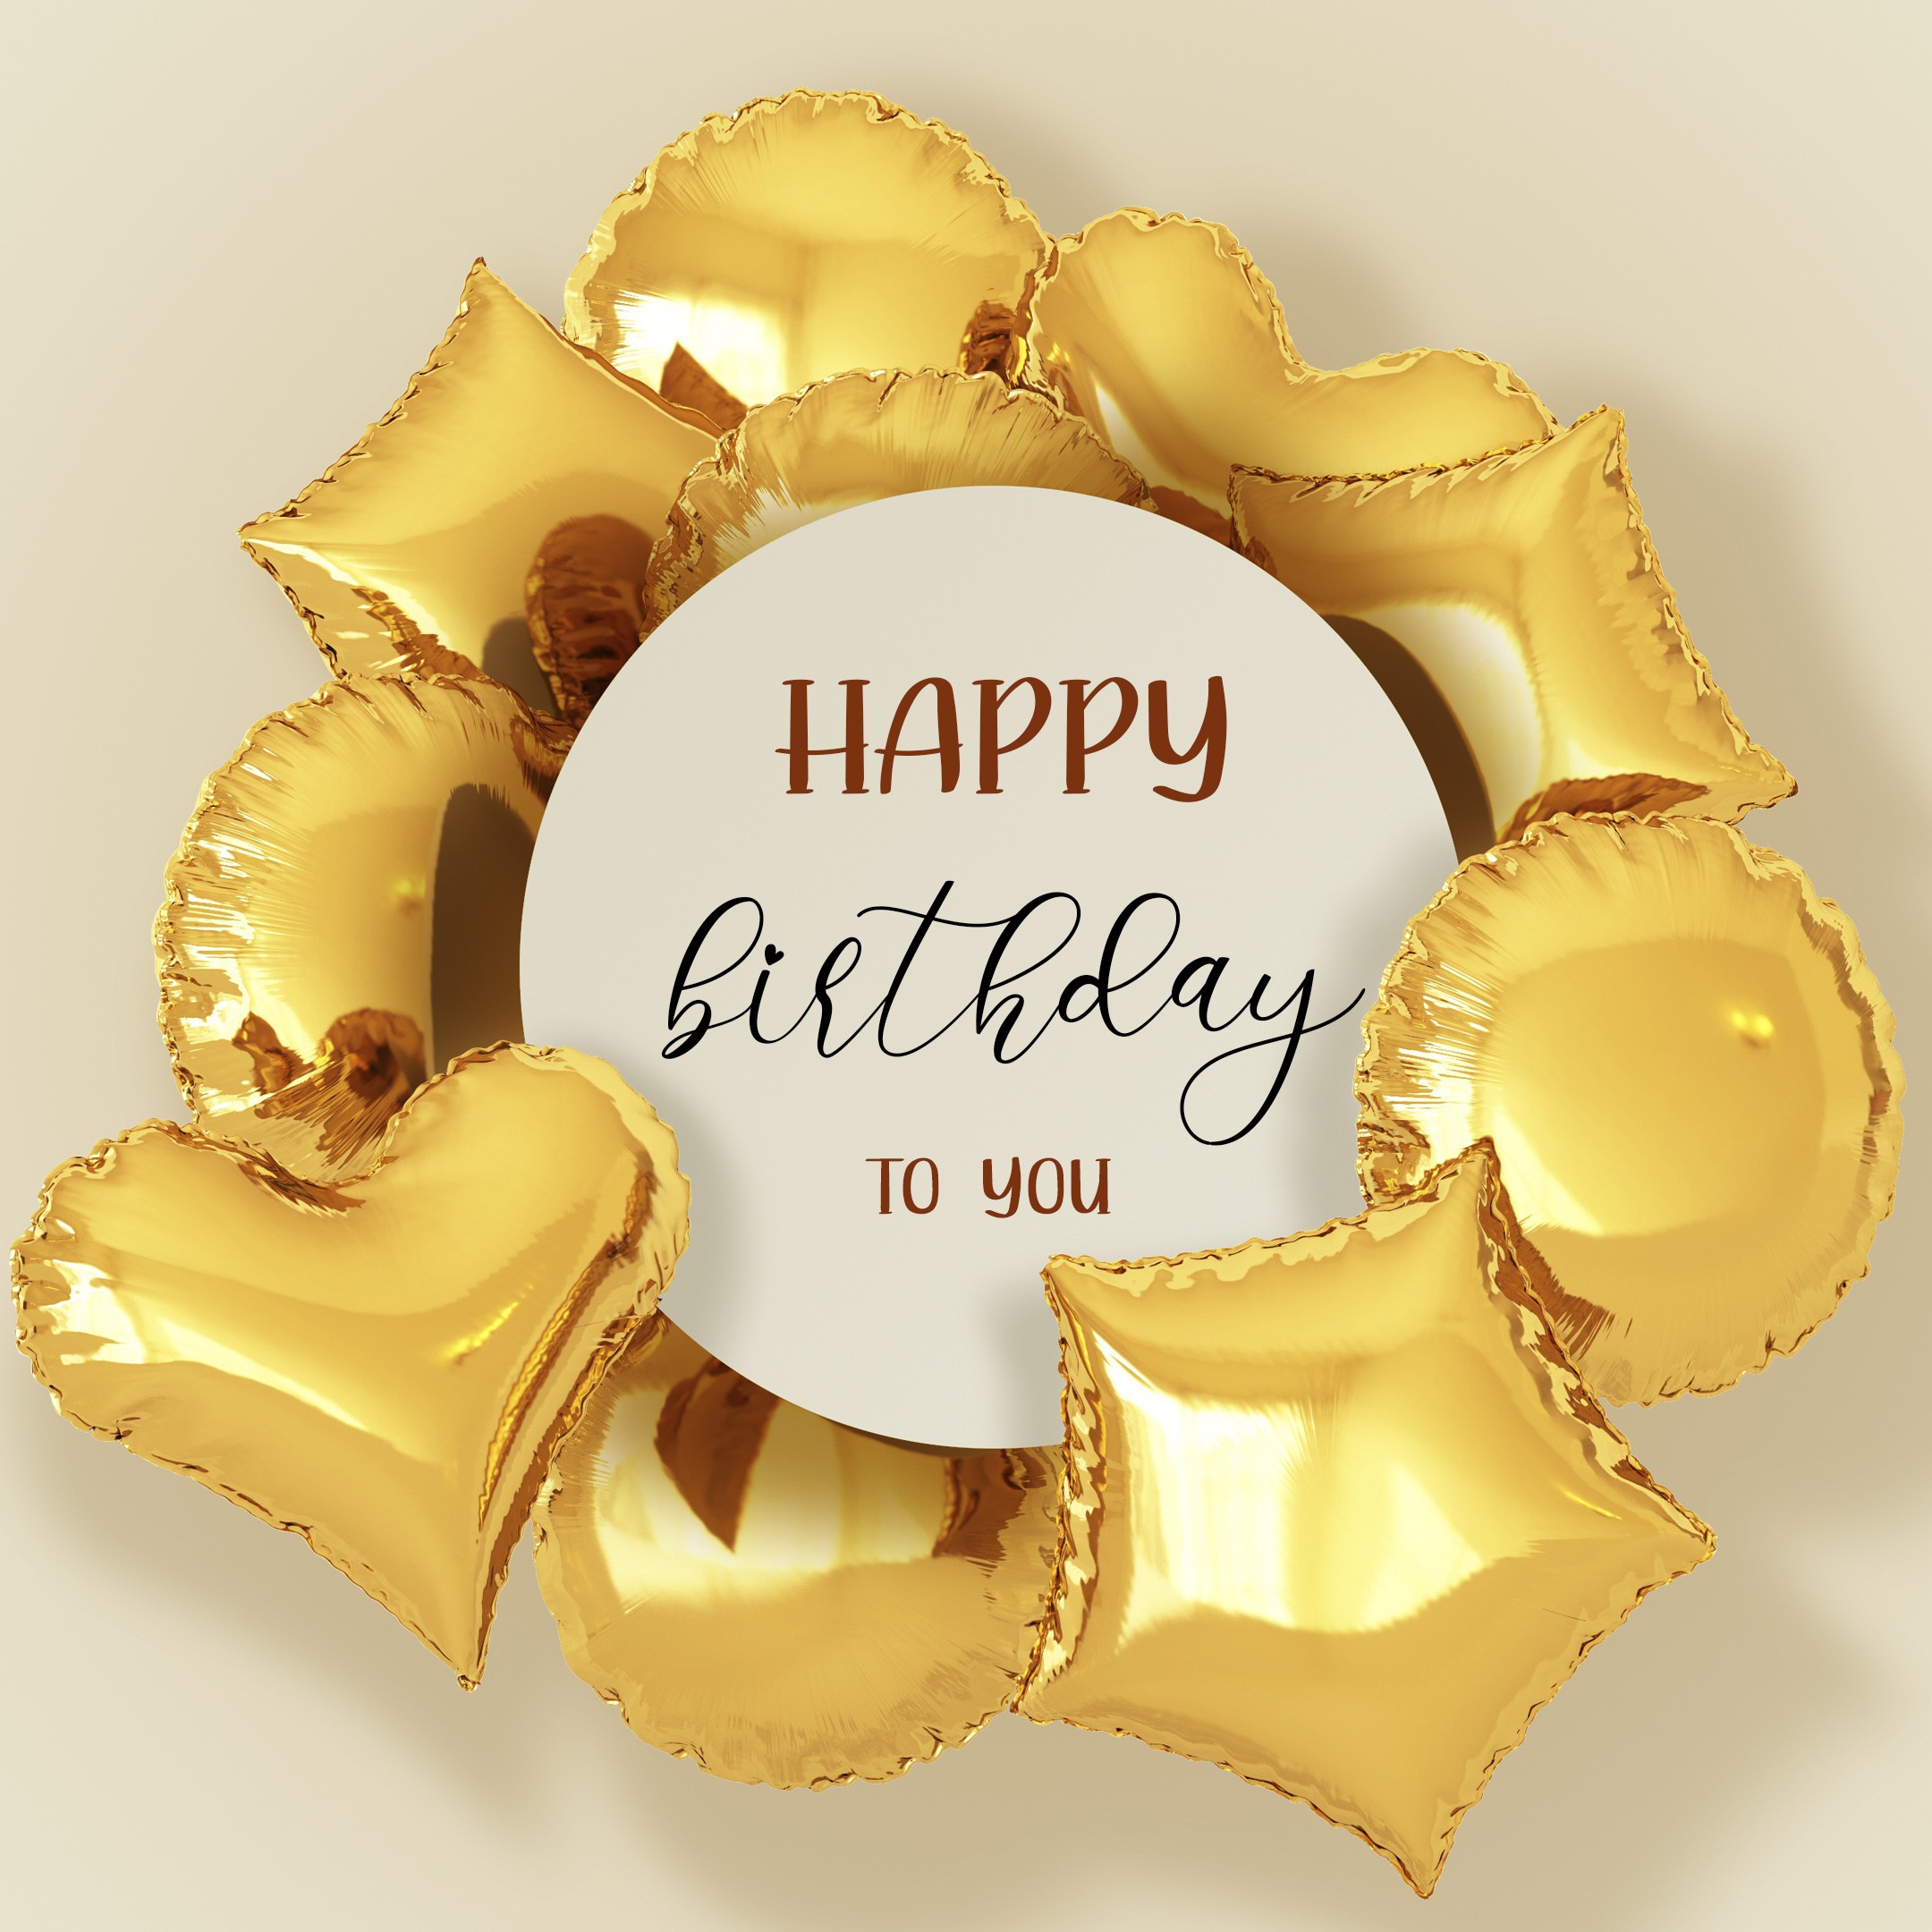 Free Happy Birthday Image With Golden Balloons - birthdayimg.com